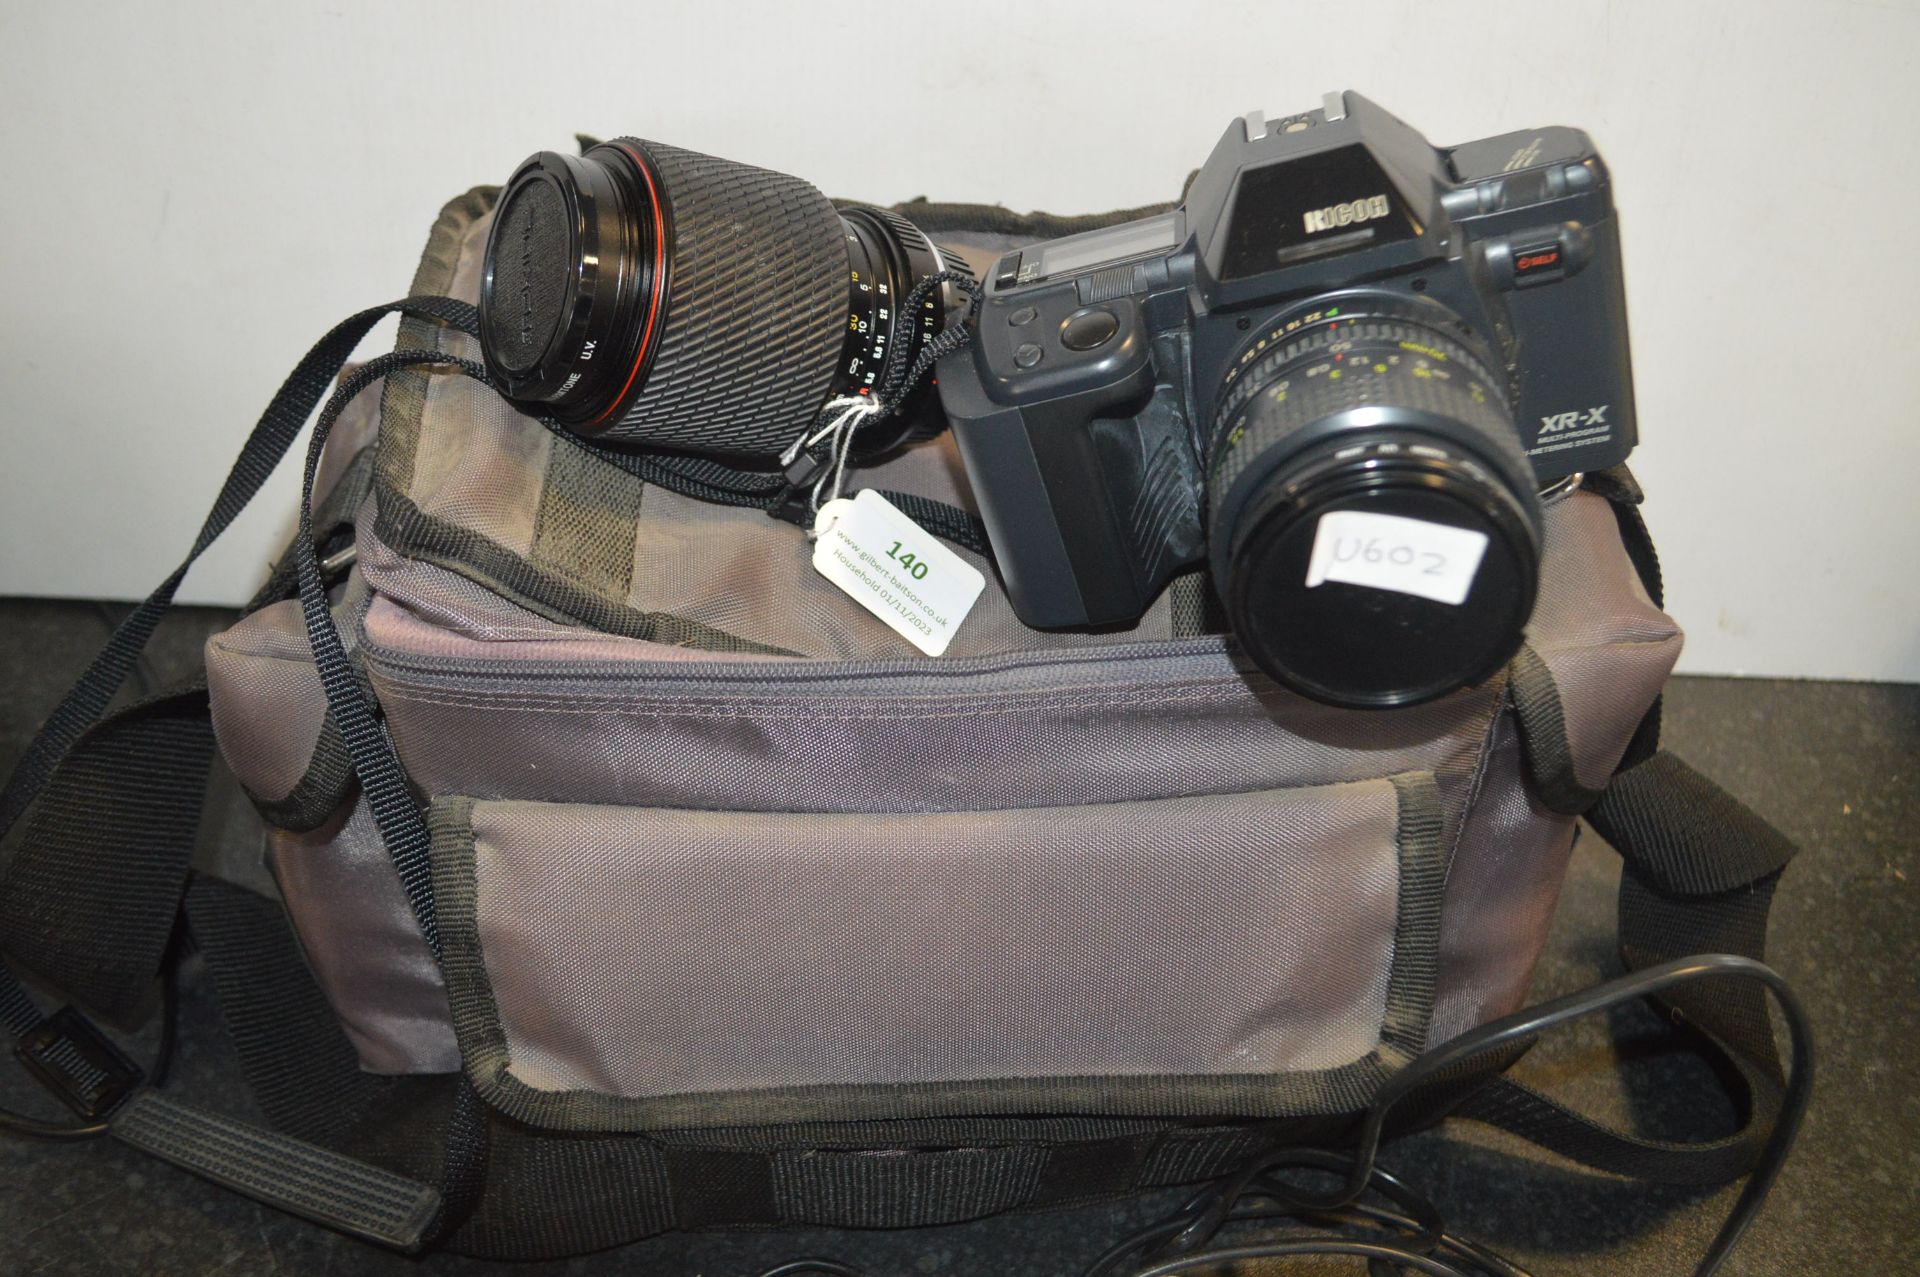 Ricoh XRX Film Camera with Tokina Lens, and Camera